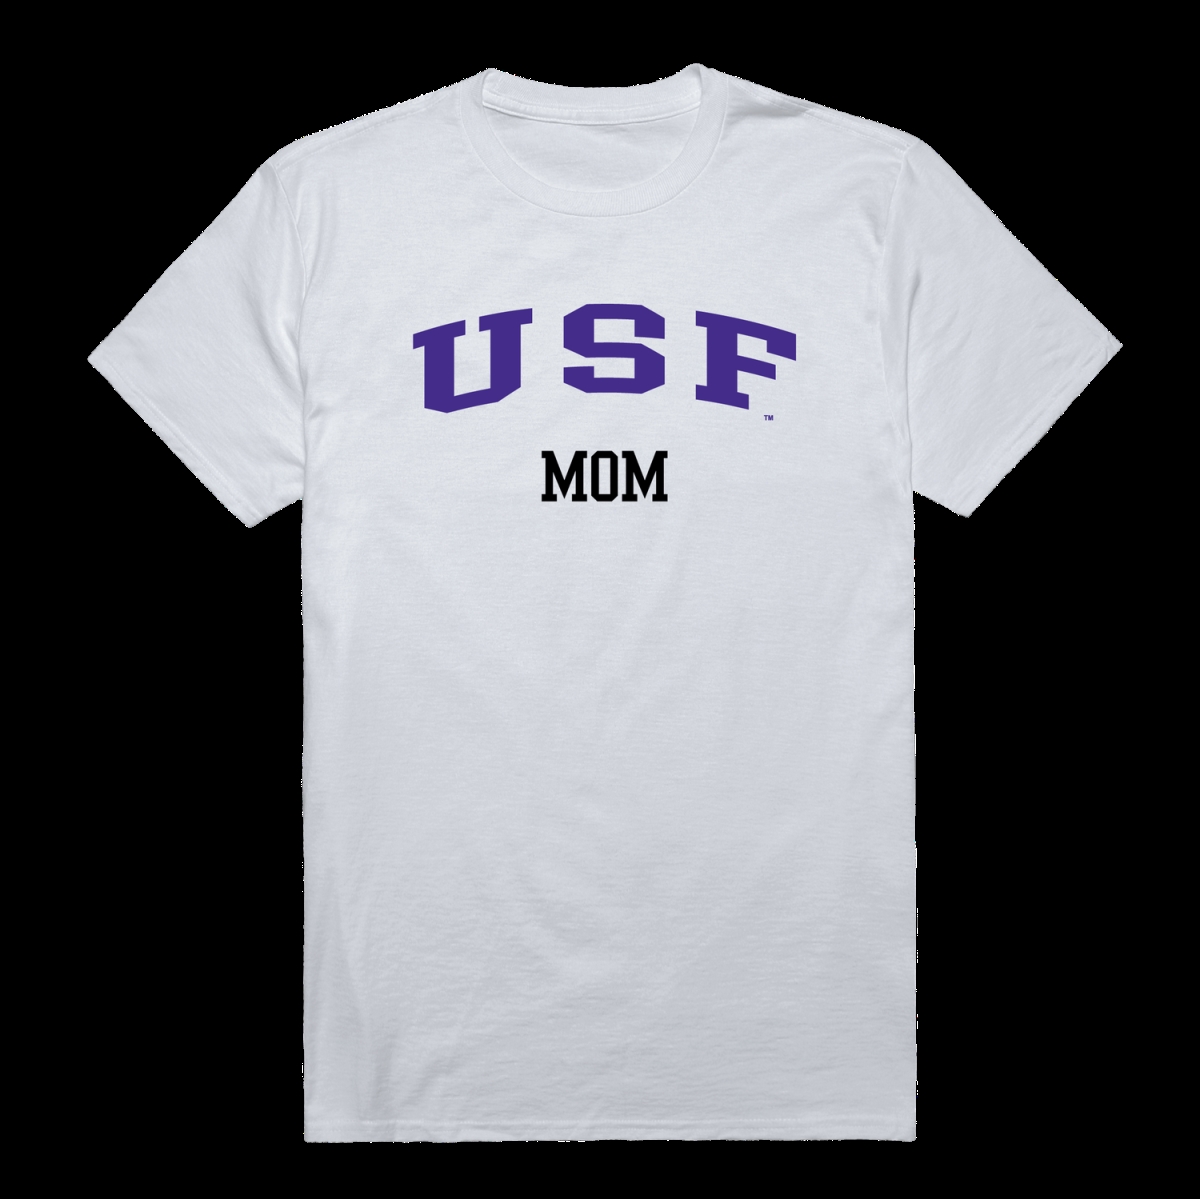 549-380-WT2-02 University of Sioux Falls Cougars College Mom T-Shirt, White - Medium -  W Republic